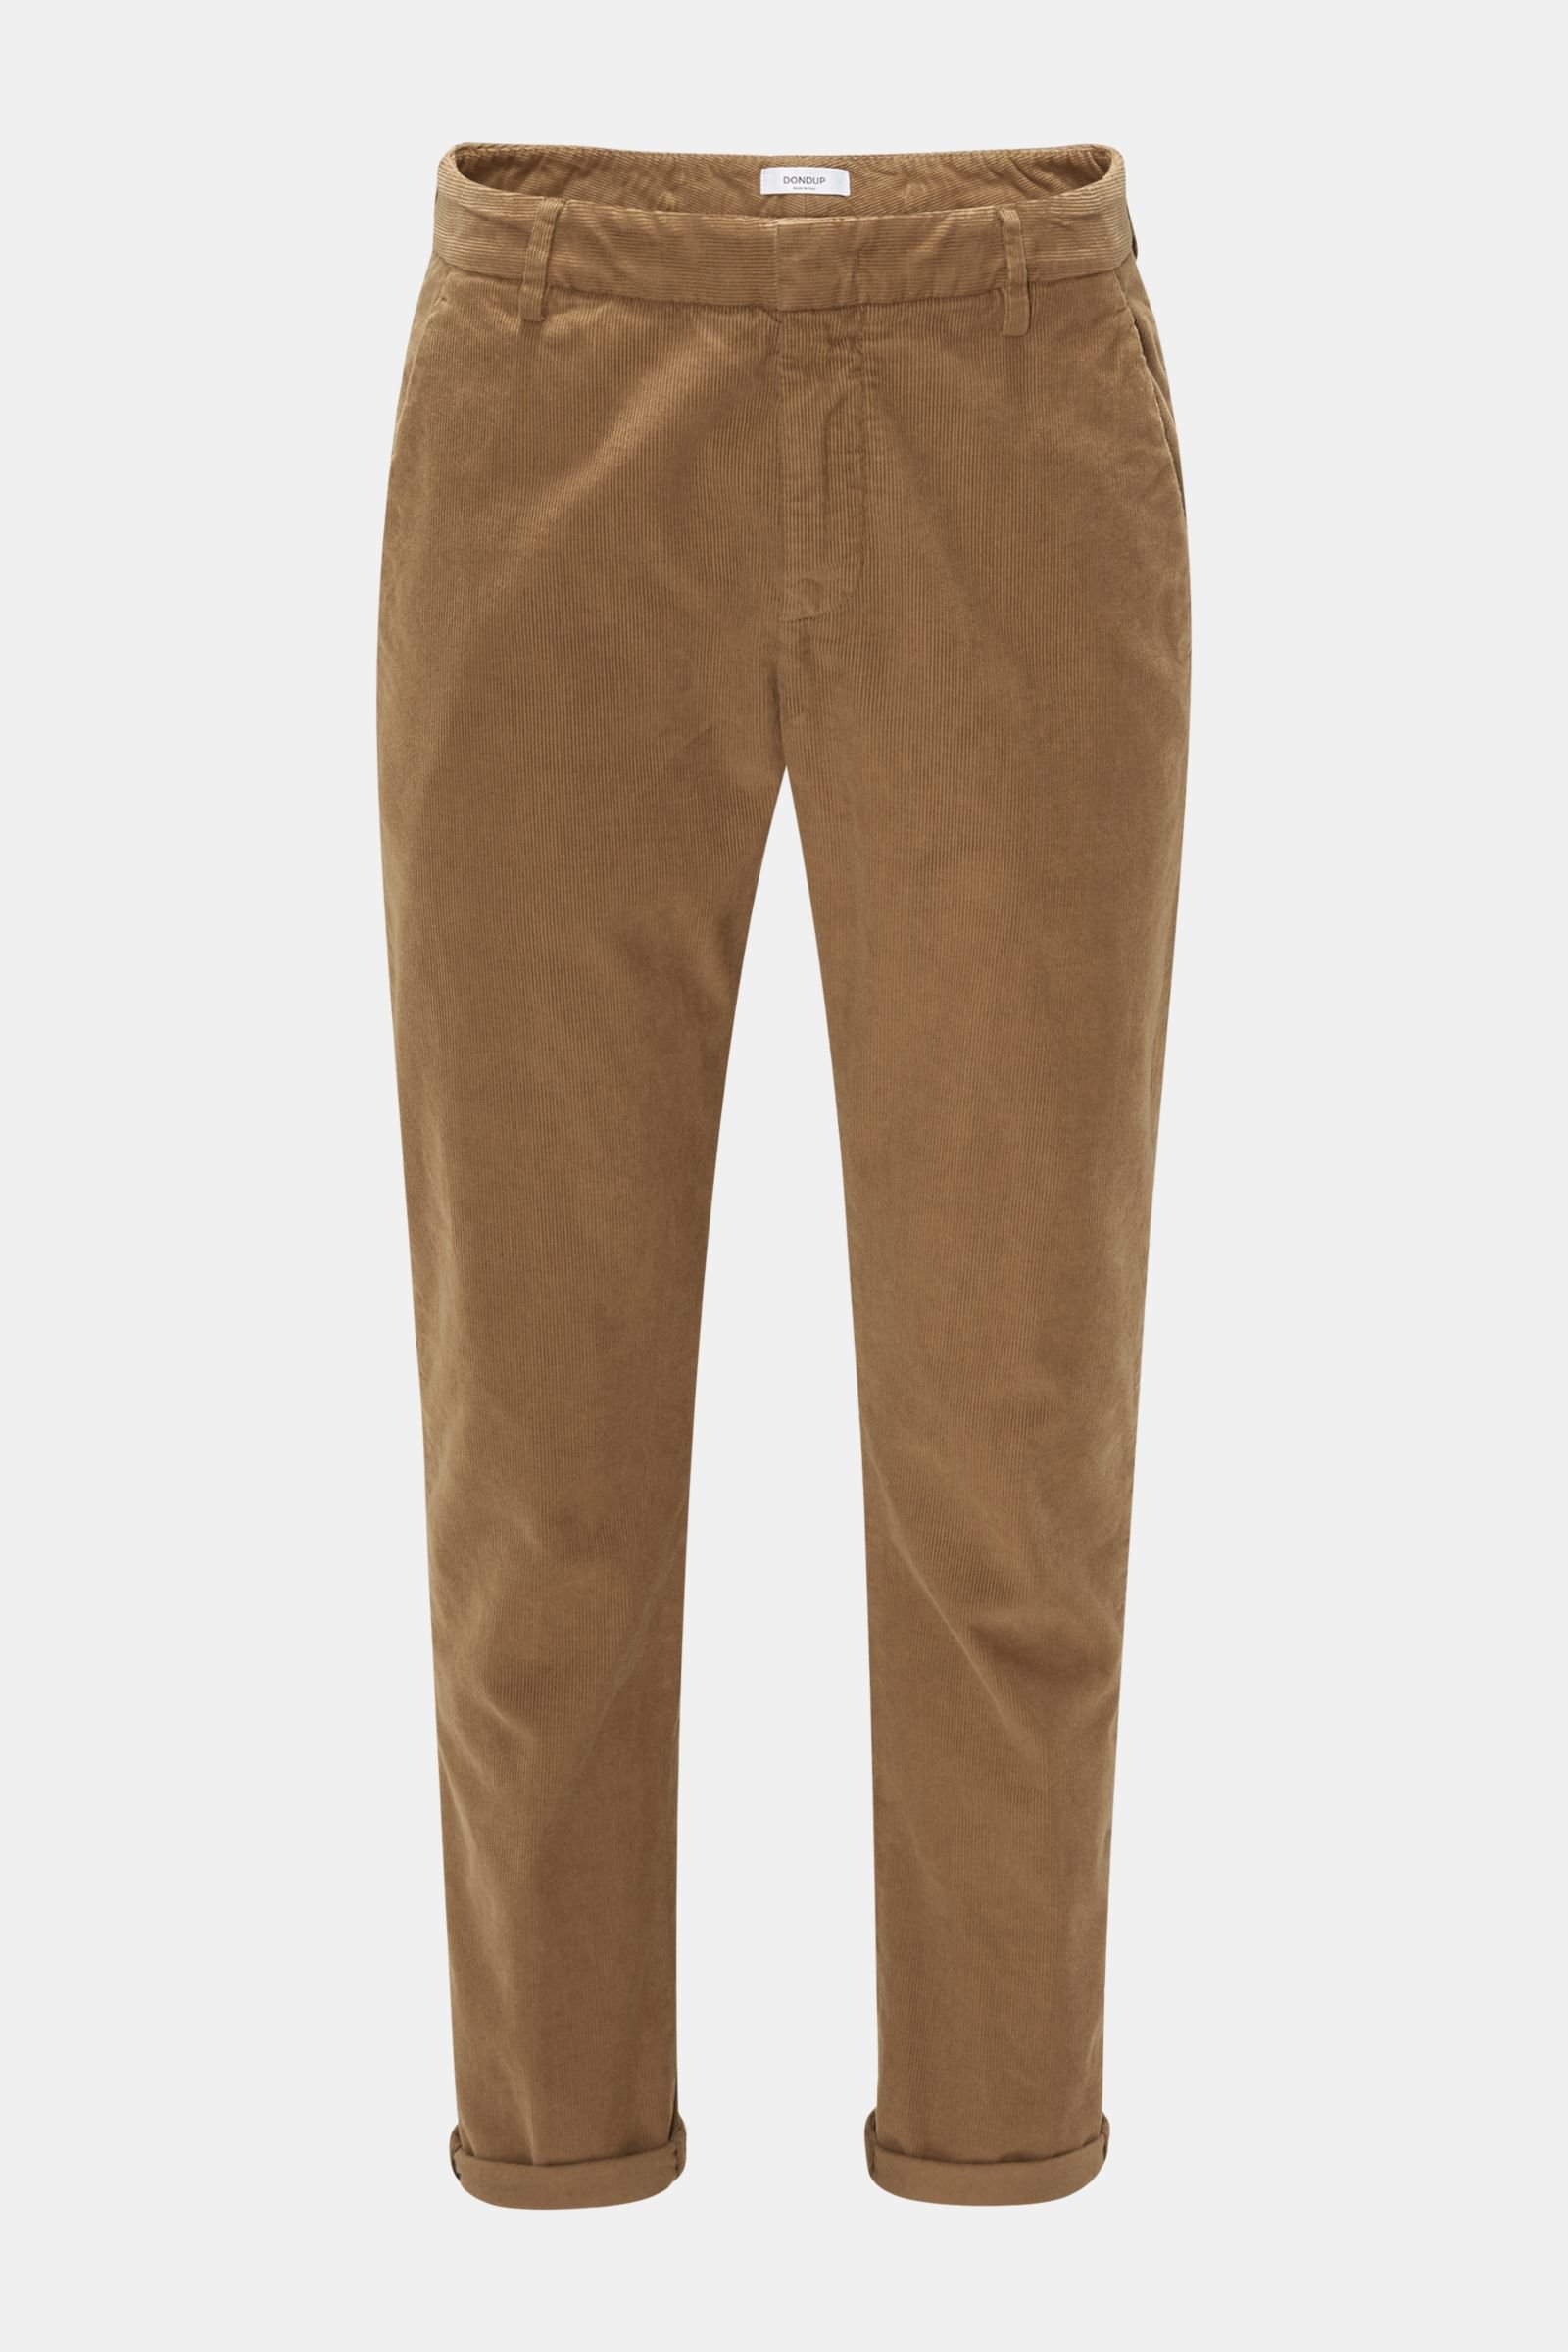 Corduroy trousers light brown